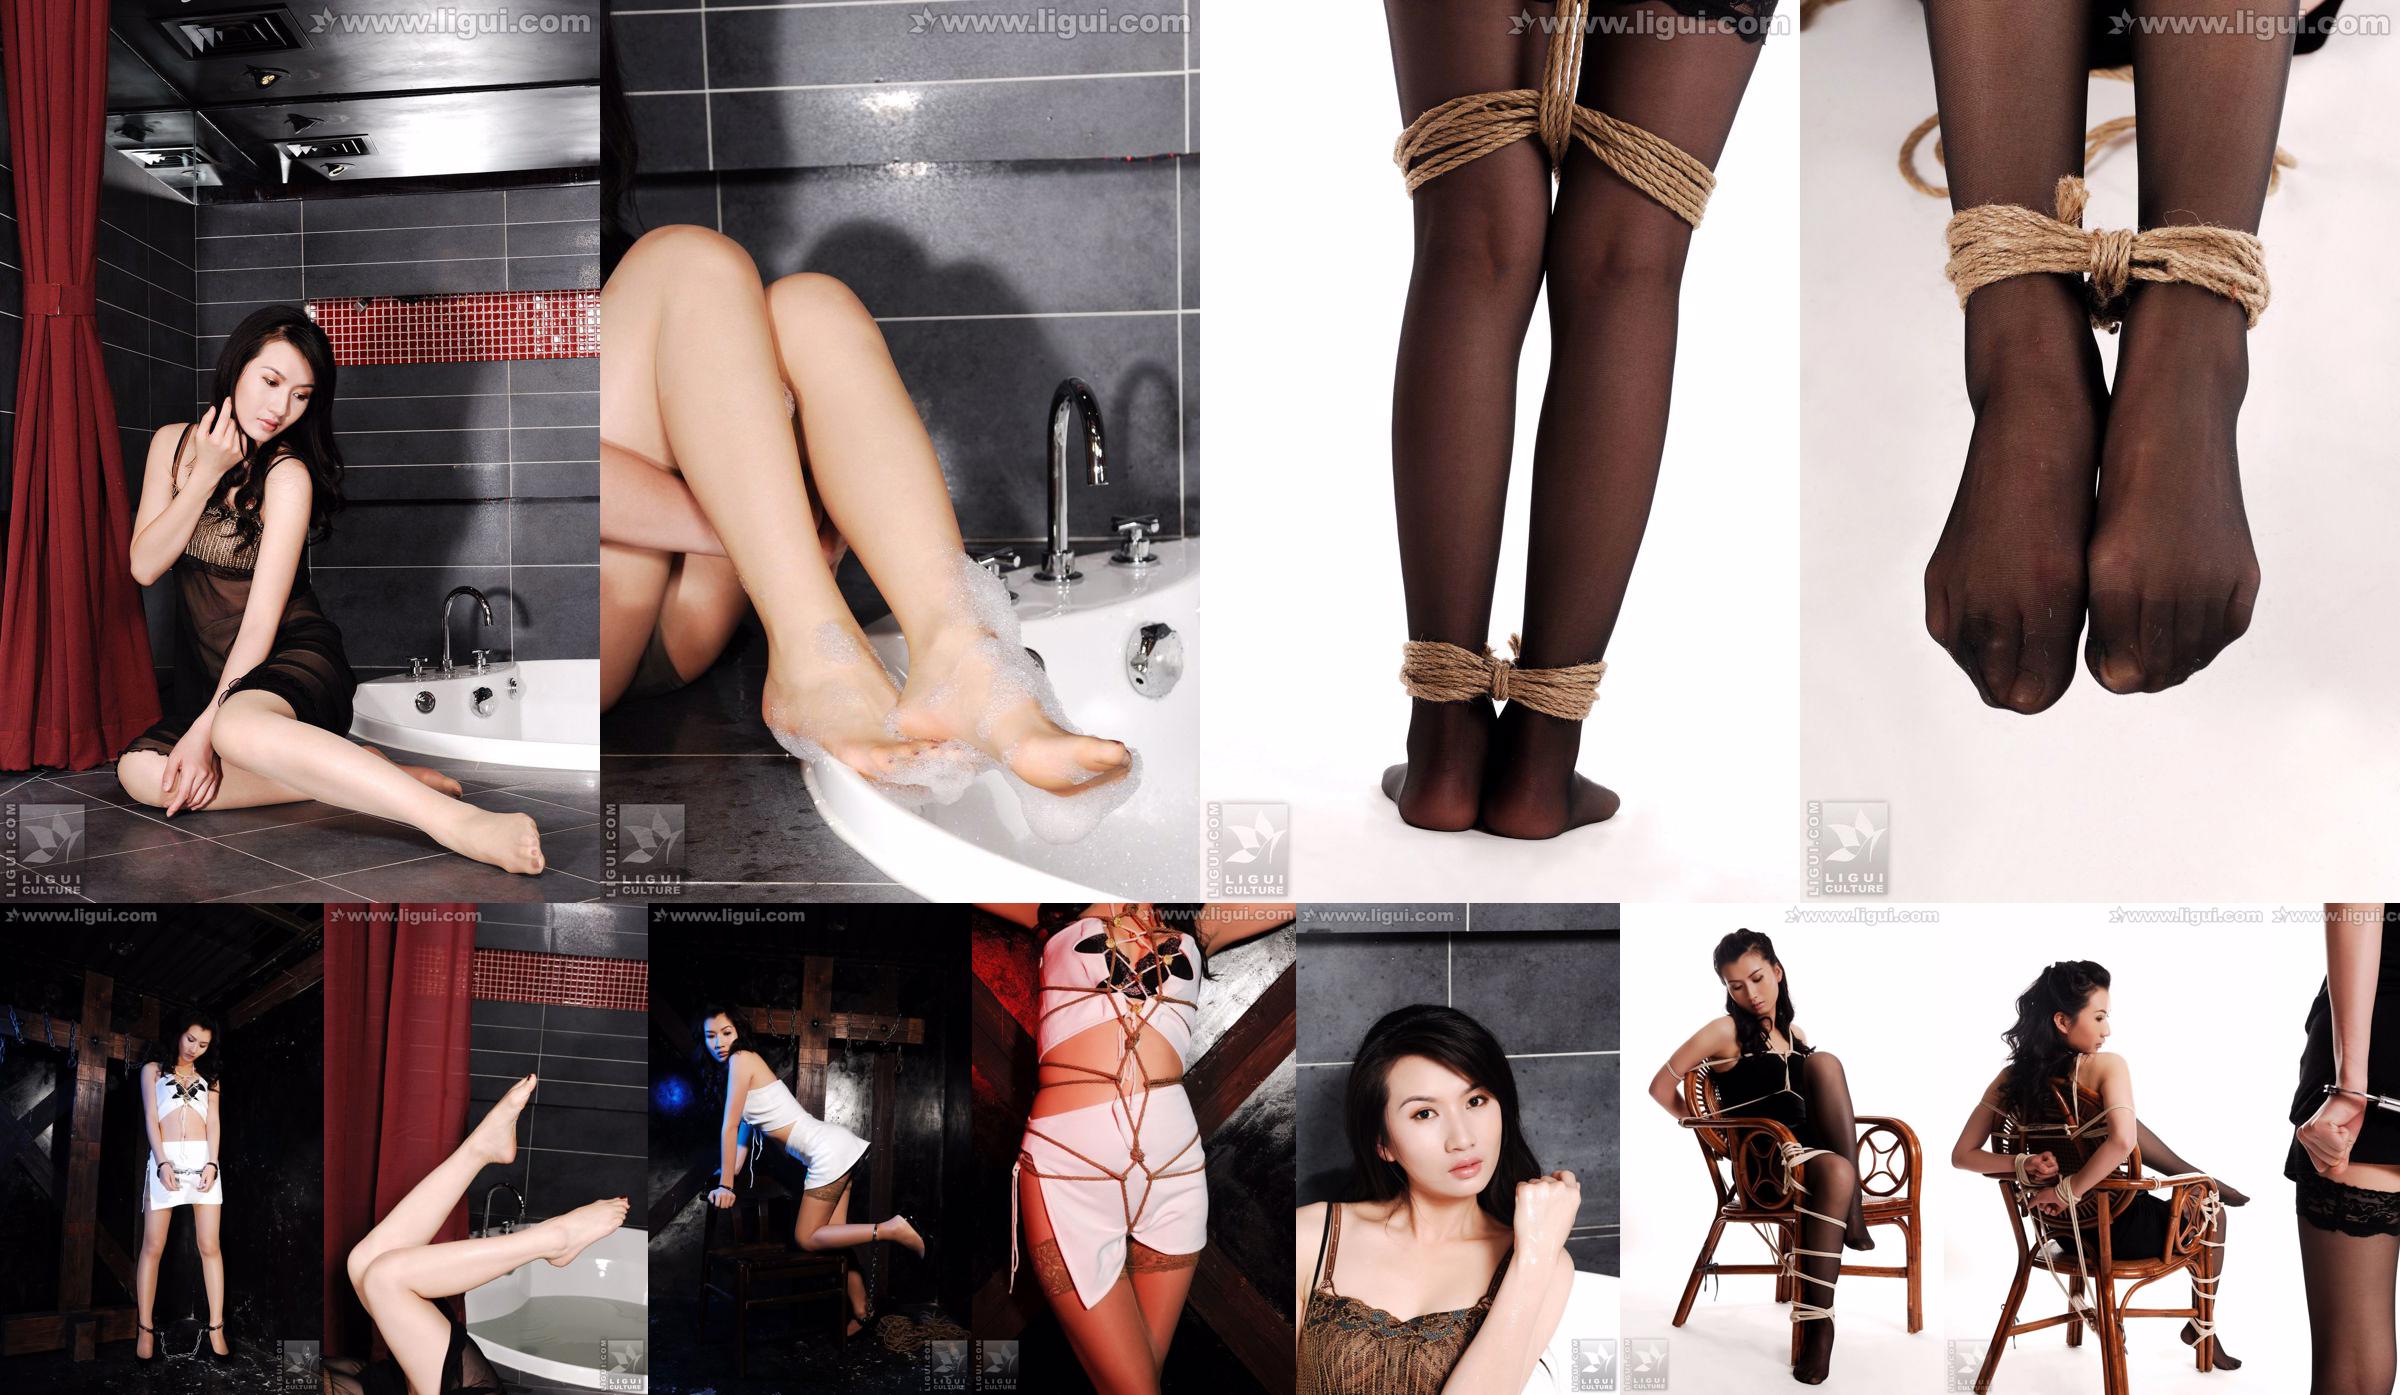 Model Yu Li "LiGui LiGui" Stockings Photo Picture No.7a80d2 Page 4